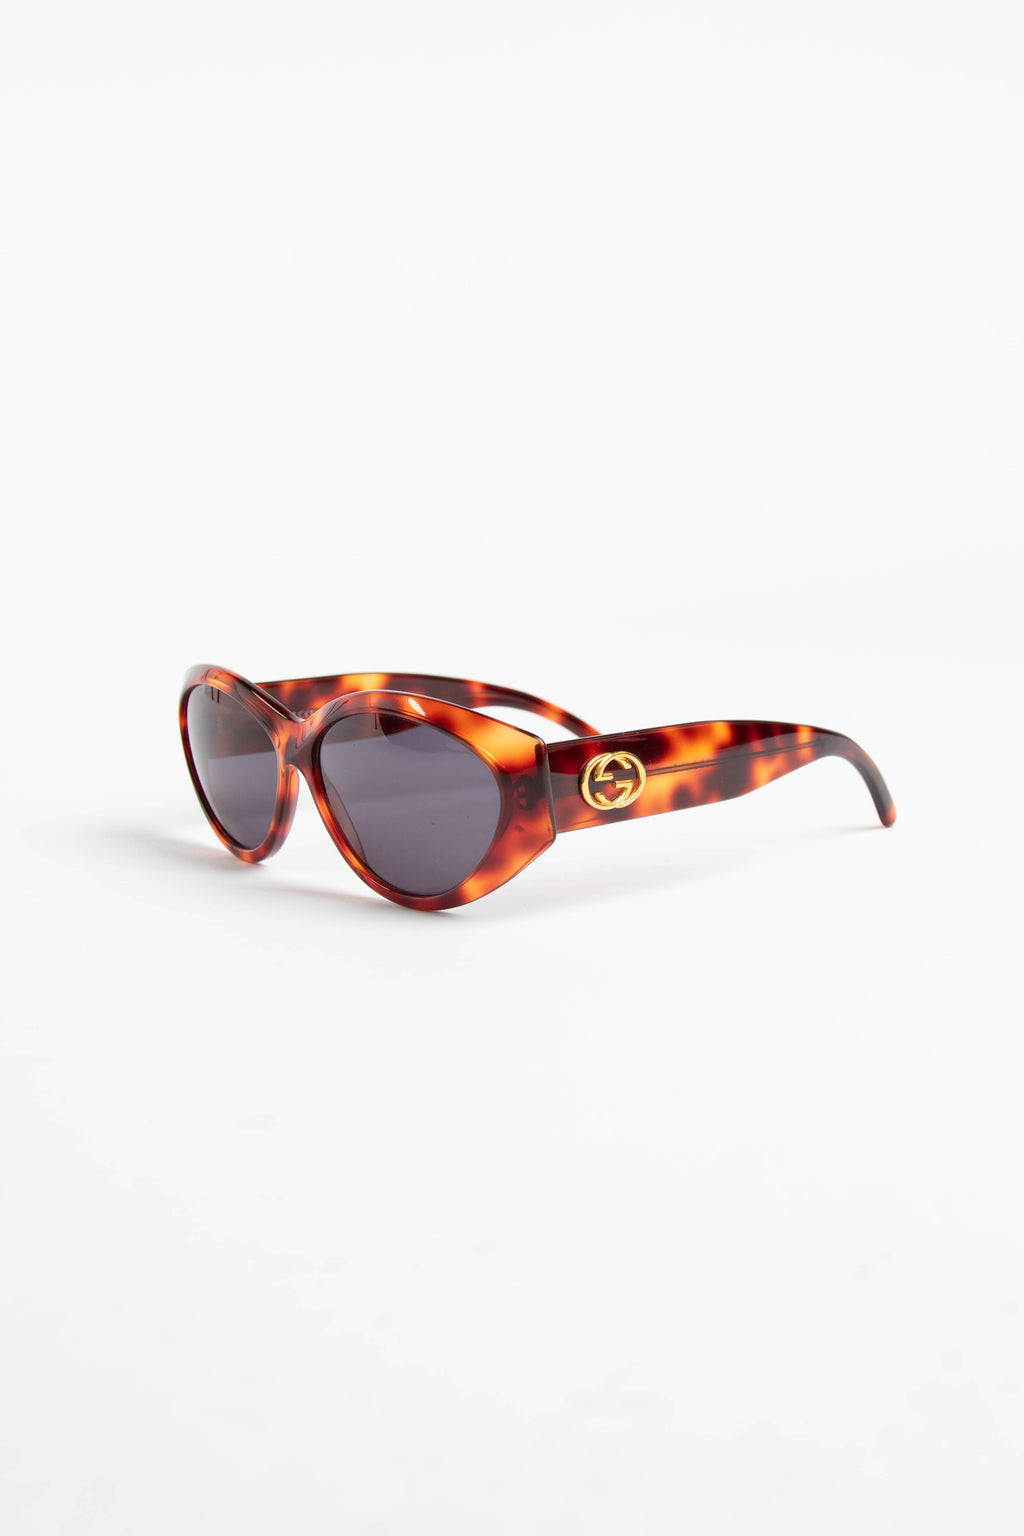 Vintage Gucci Tort Sunglasses